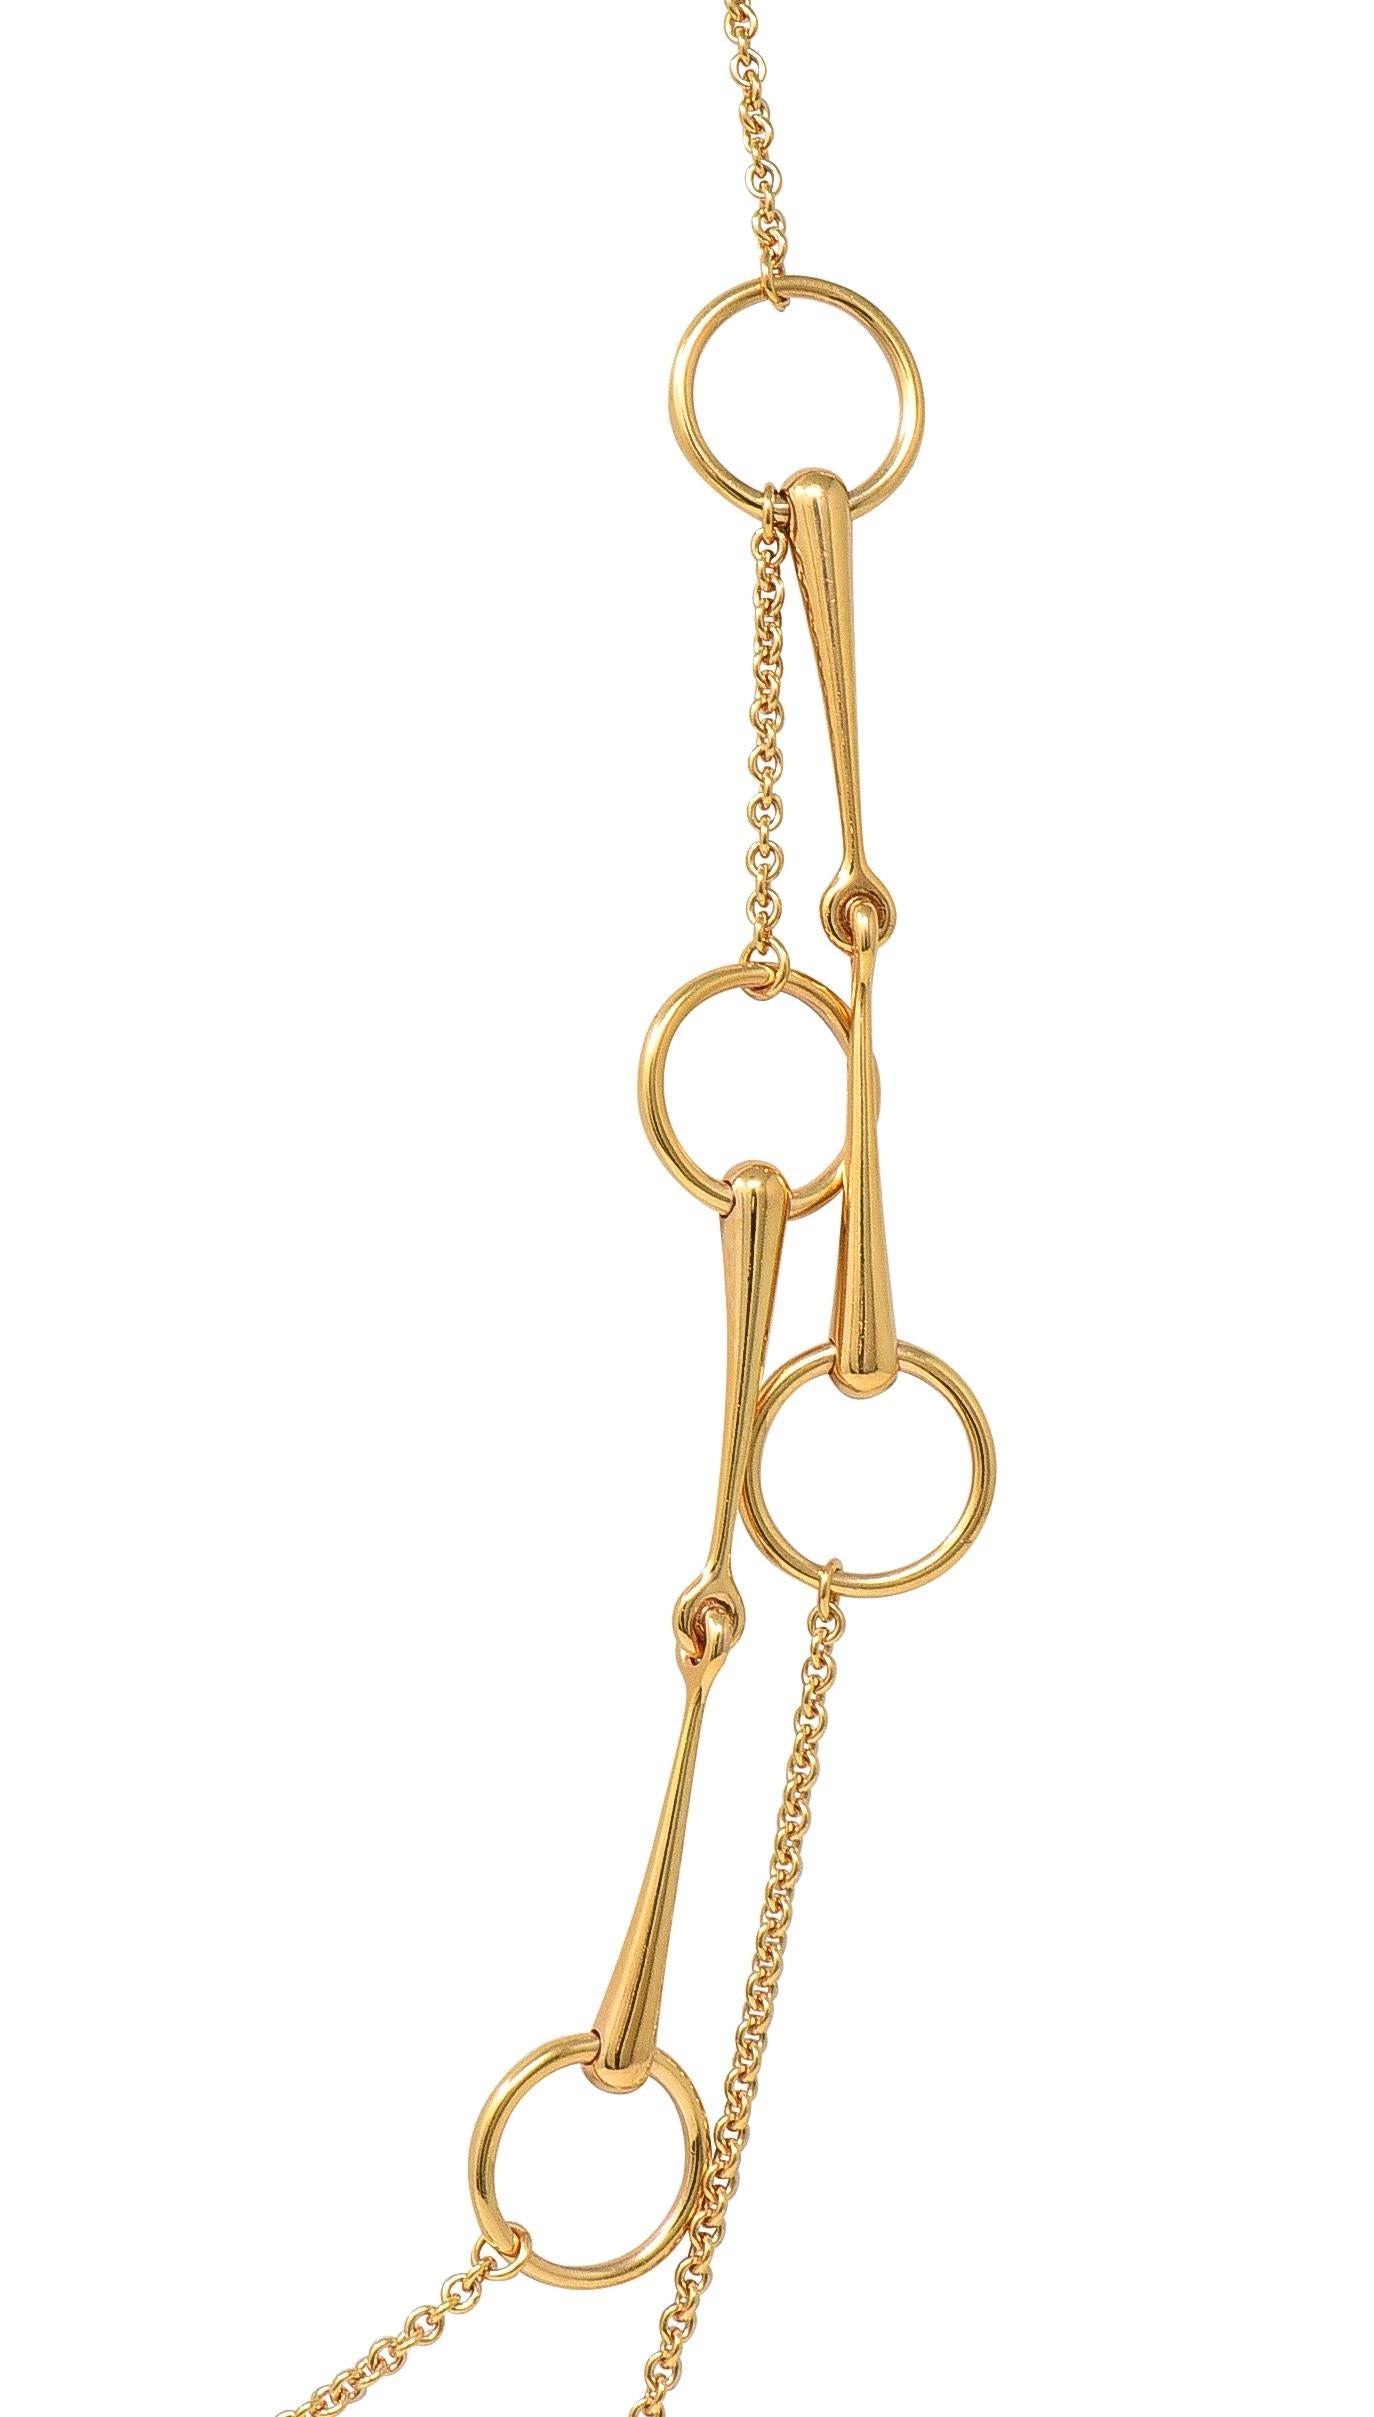 Hermés Contemporary 18 Karat Yellow Gold Filet d'Or Horse-Bit Link Necklace 2